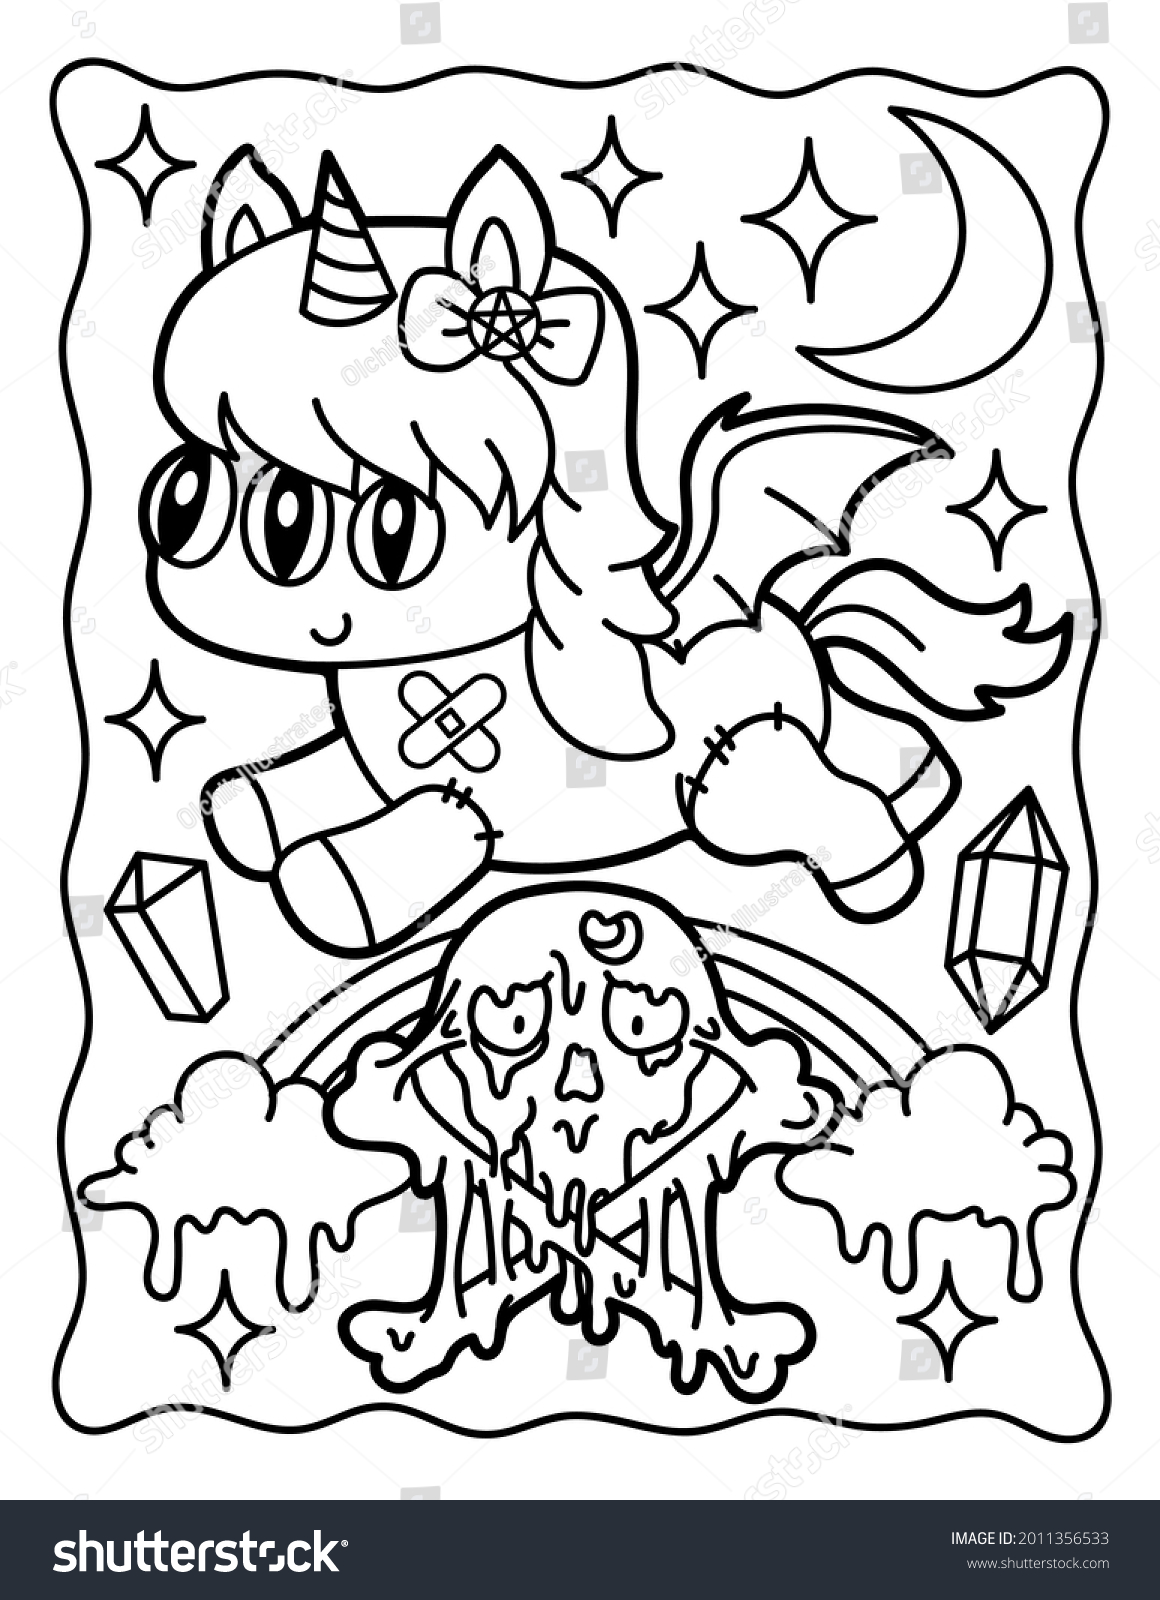 Halloween Coloring Page Unicorn 3 Eyes Stock Illustration 2011356533 ...